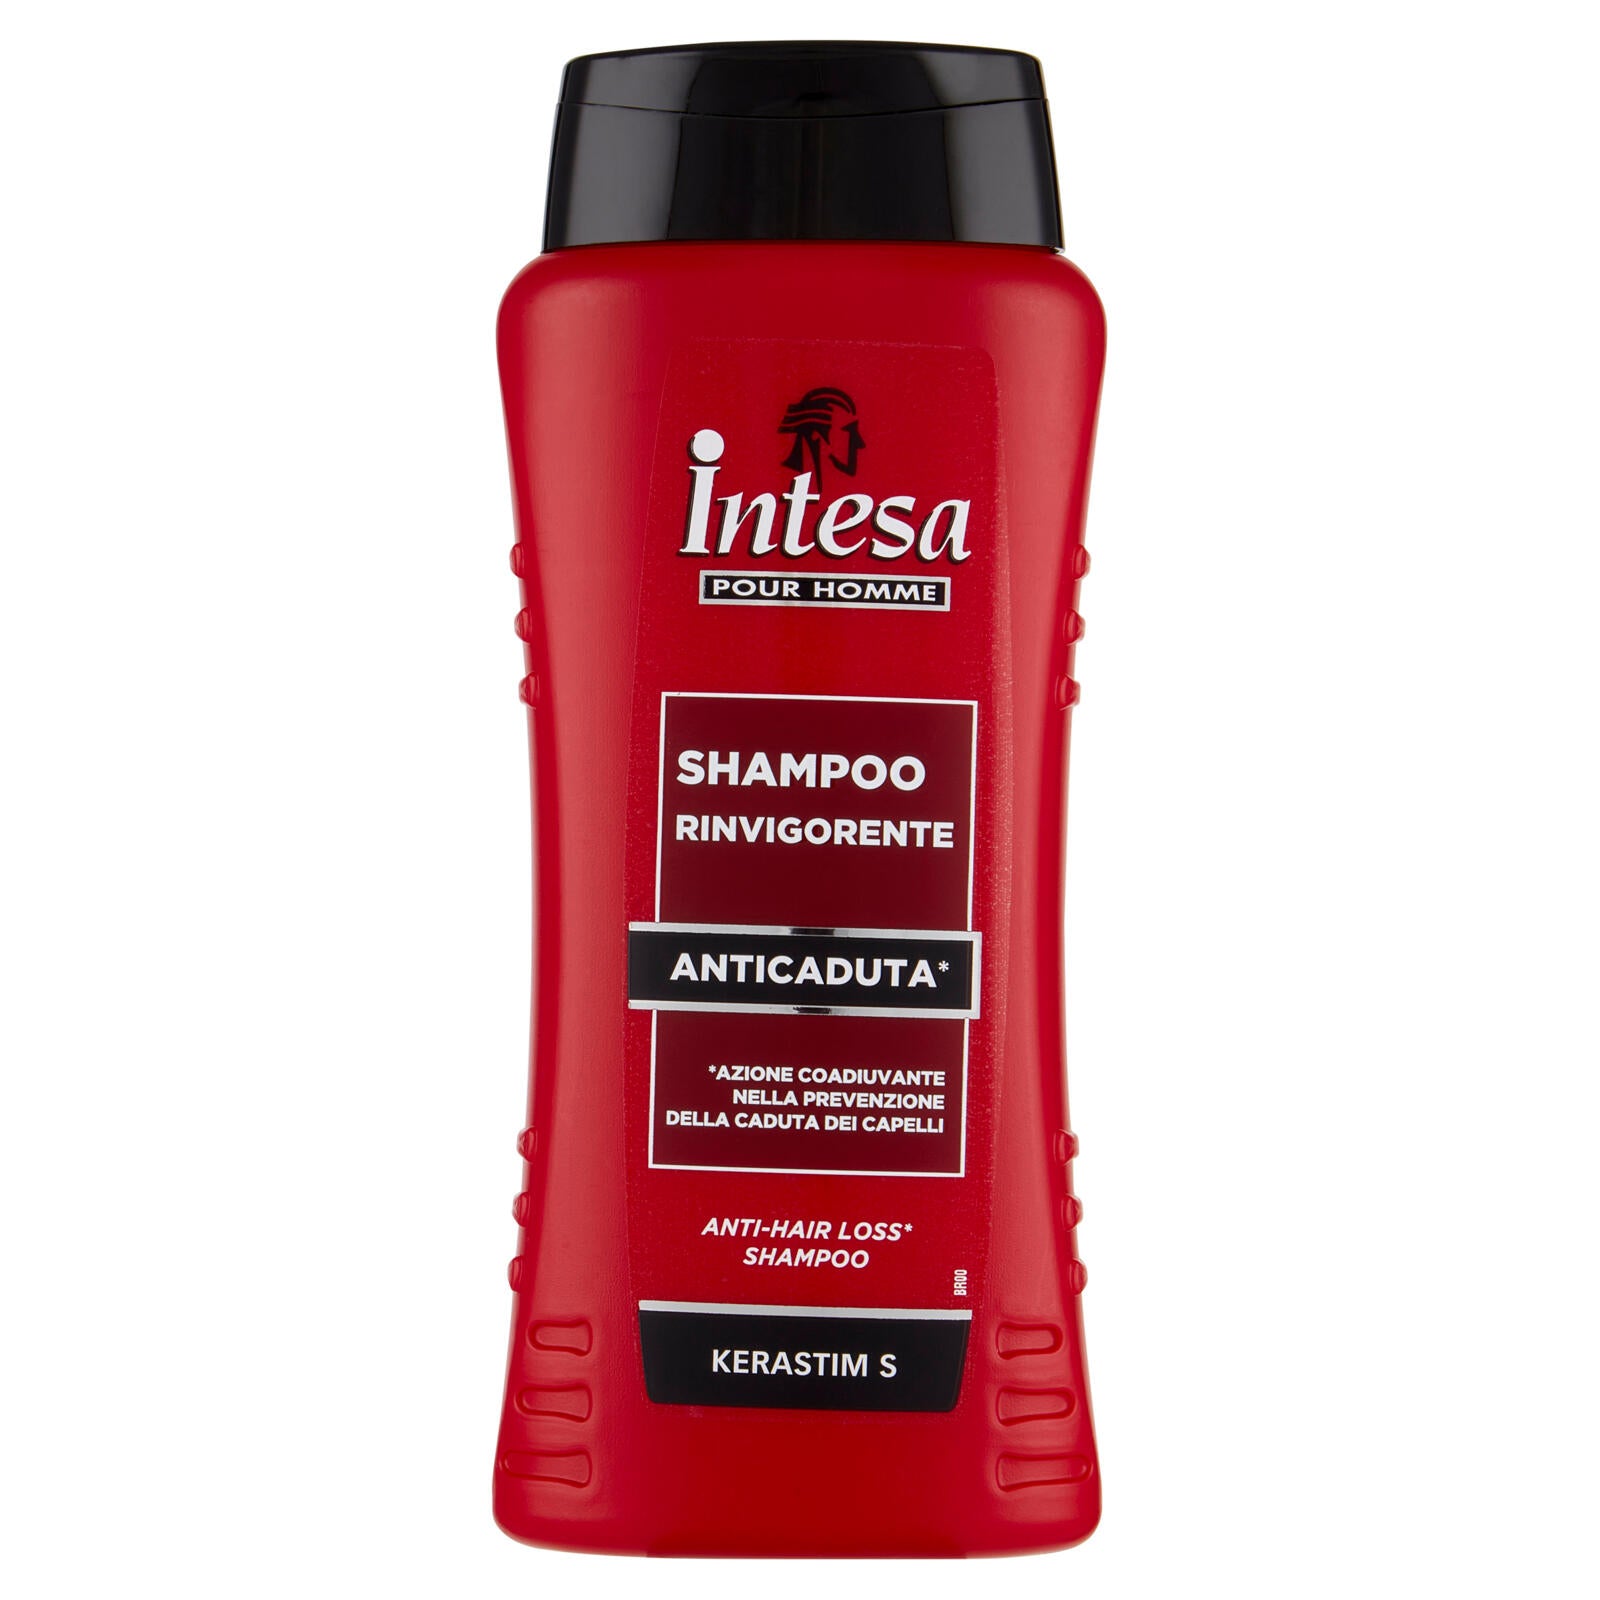 Intesa Pour Homme Shampoo Rinvigorente Anticaduta* Kerastim S 300 mL